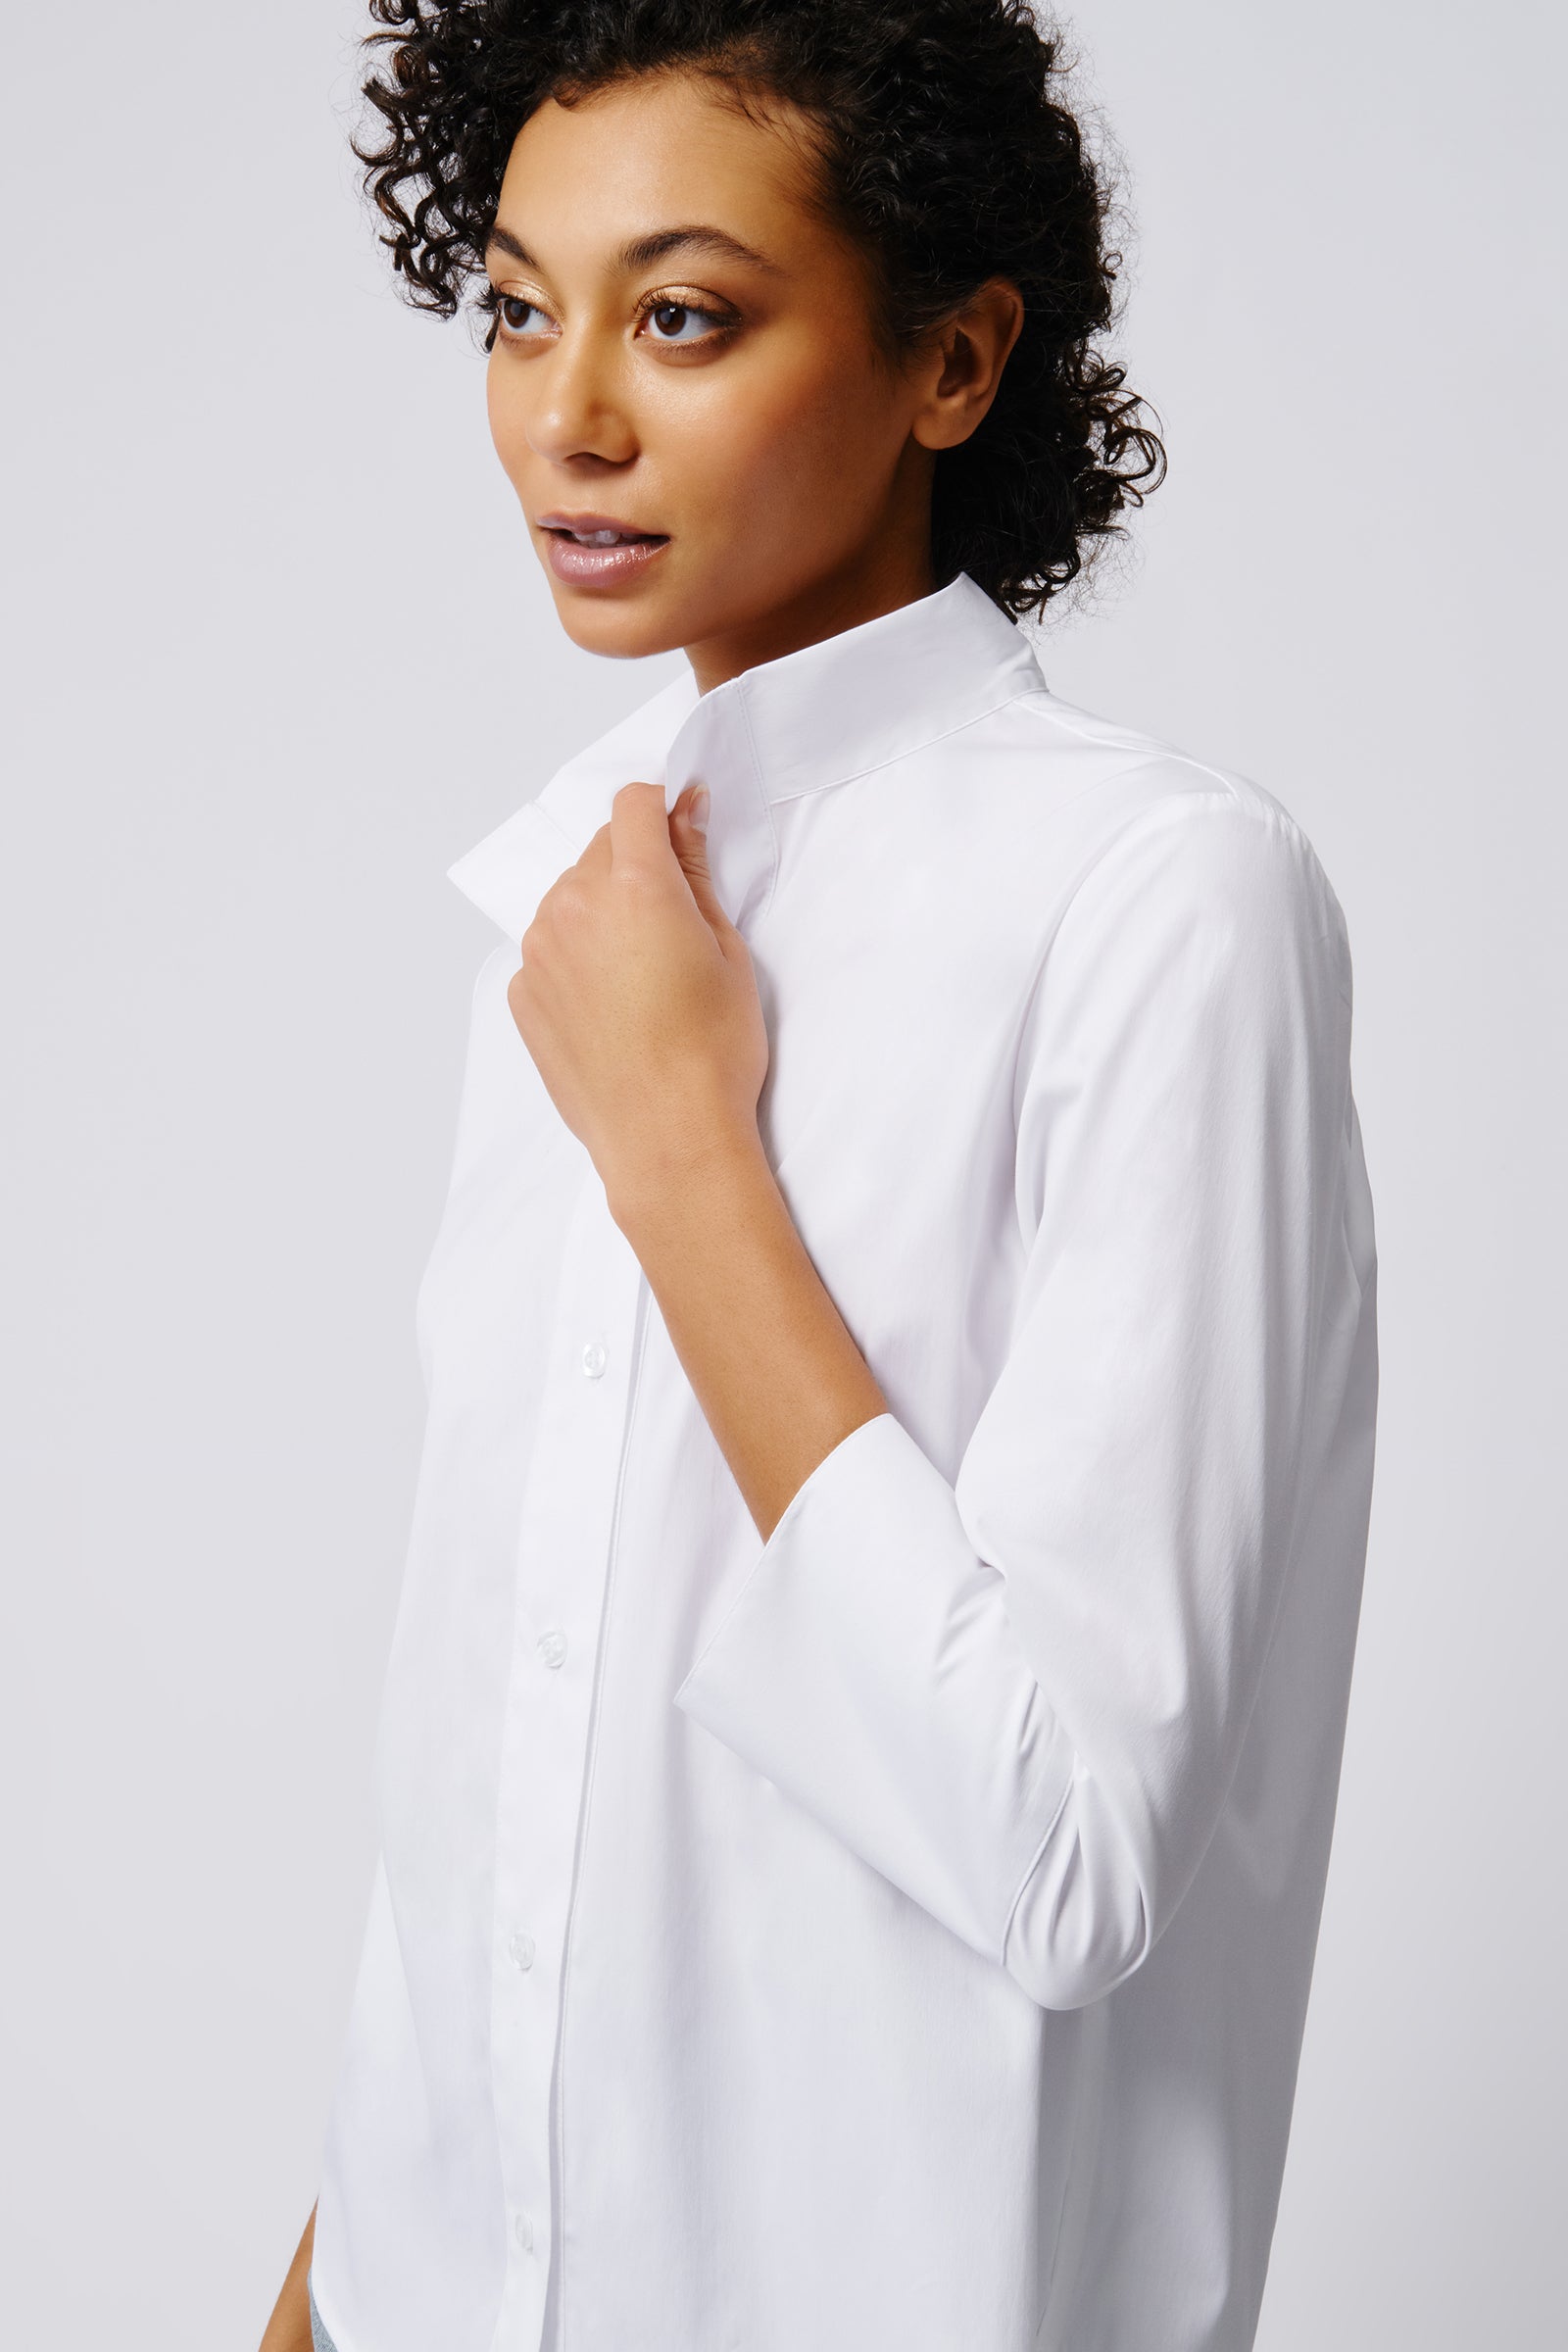 Kal Rieman Greta Placket Front Shirt in White Poplin on Model Side View Closeup